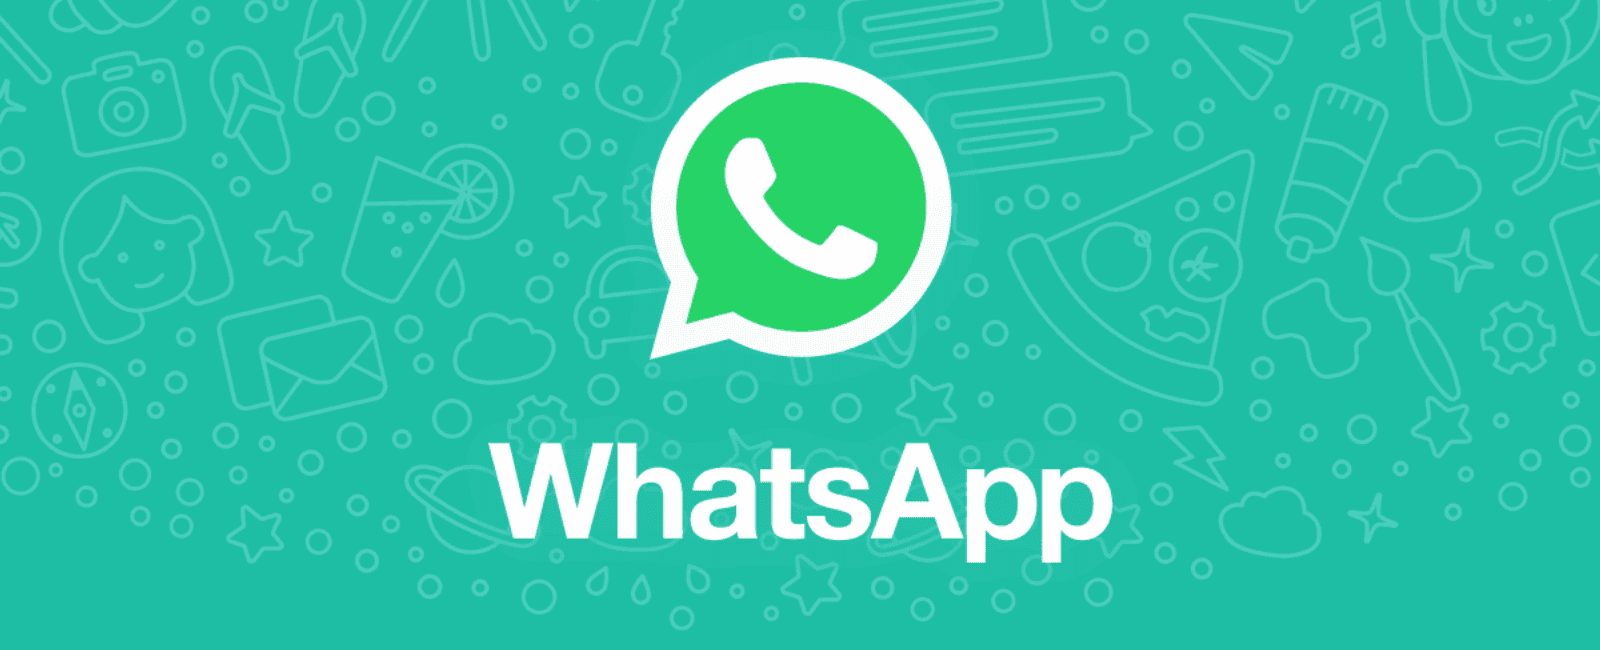 WhatsApp will change its privacy settings